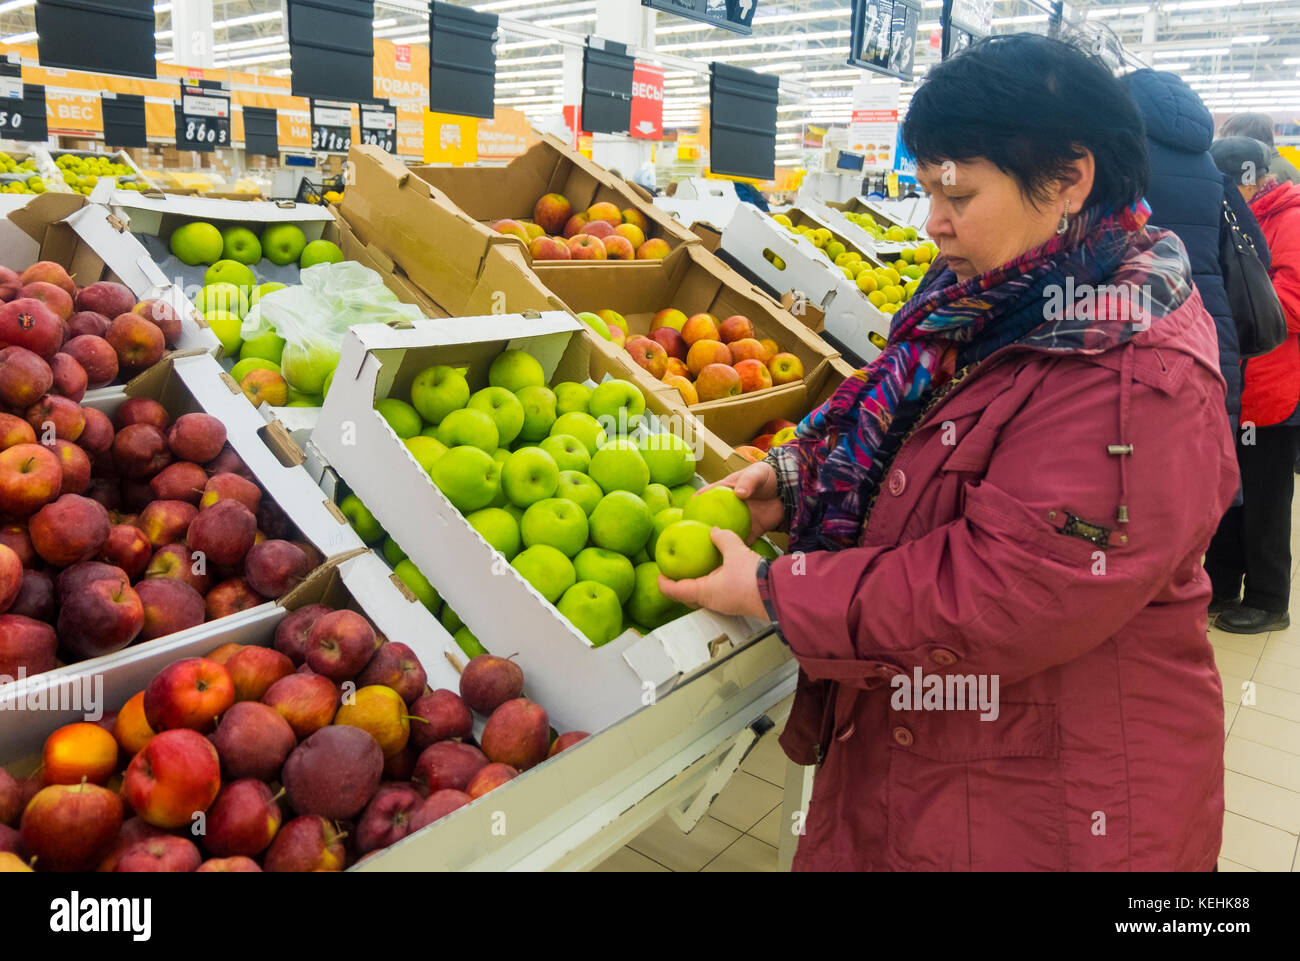 Caucasian woman examining apples Stock Photo